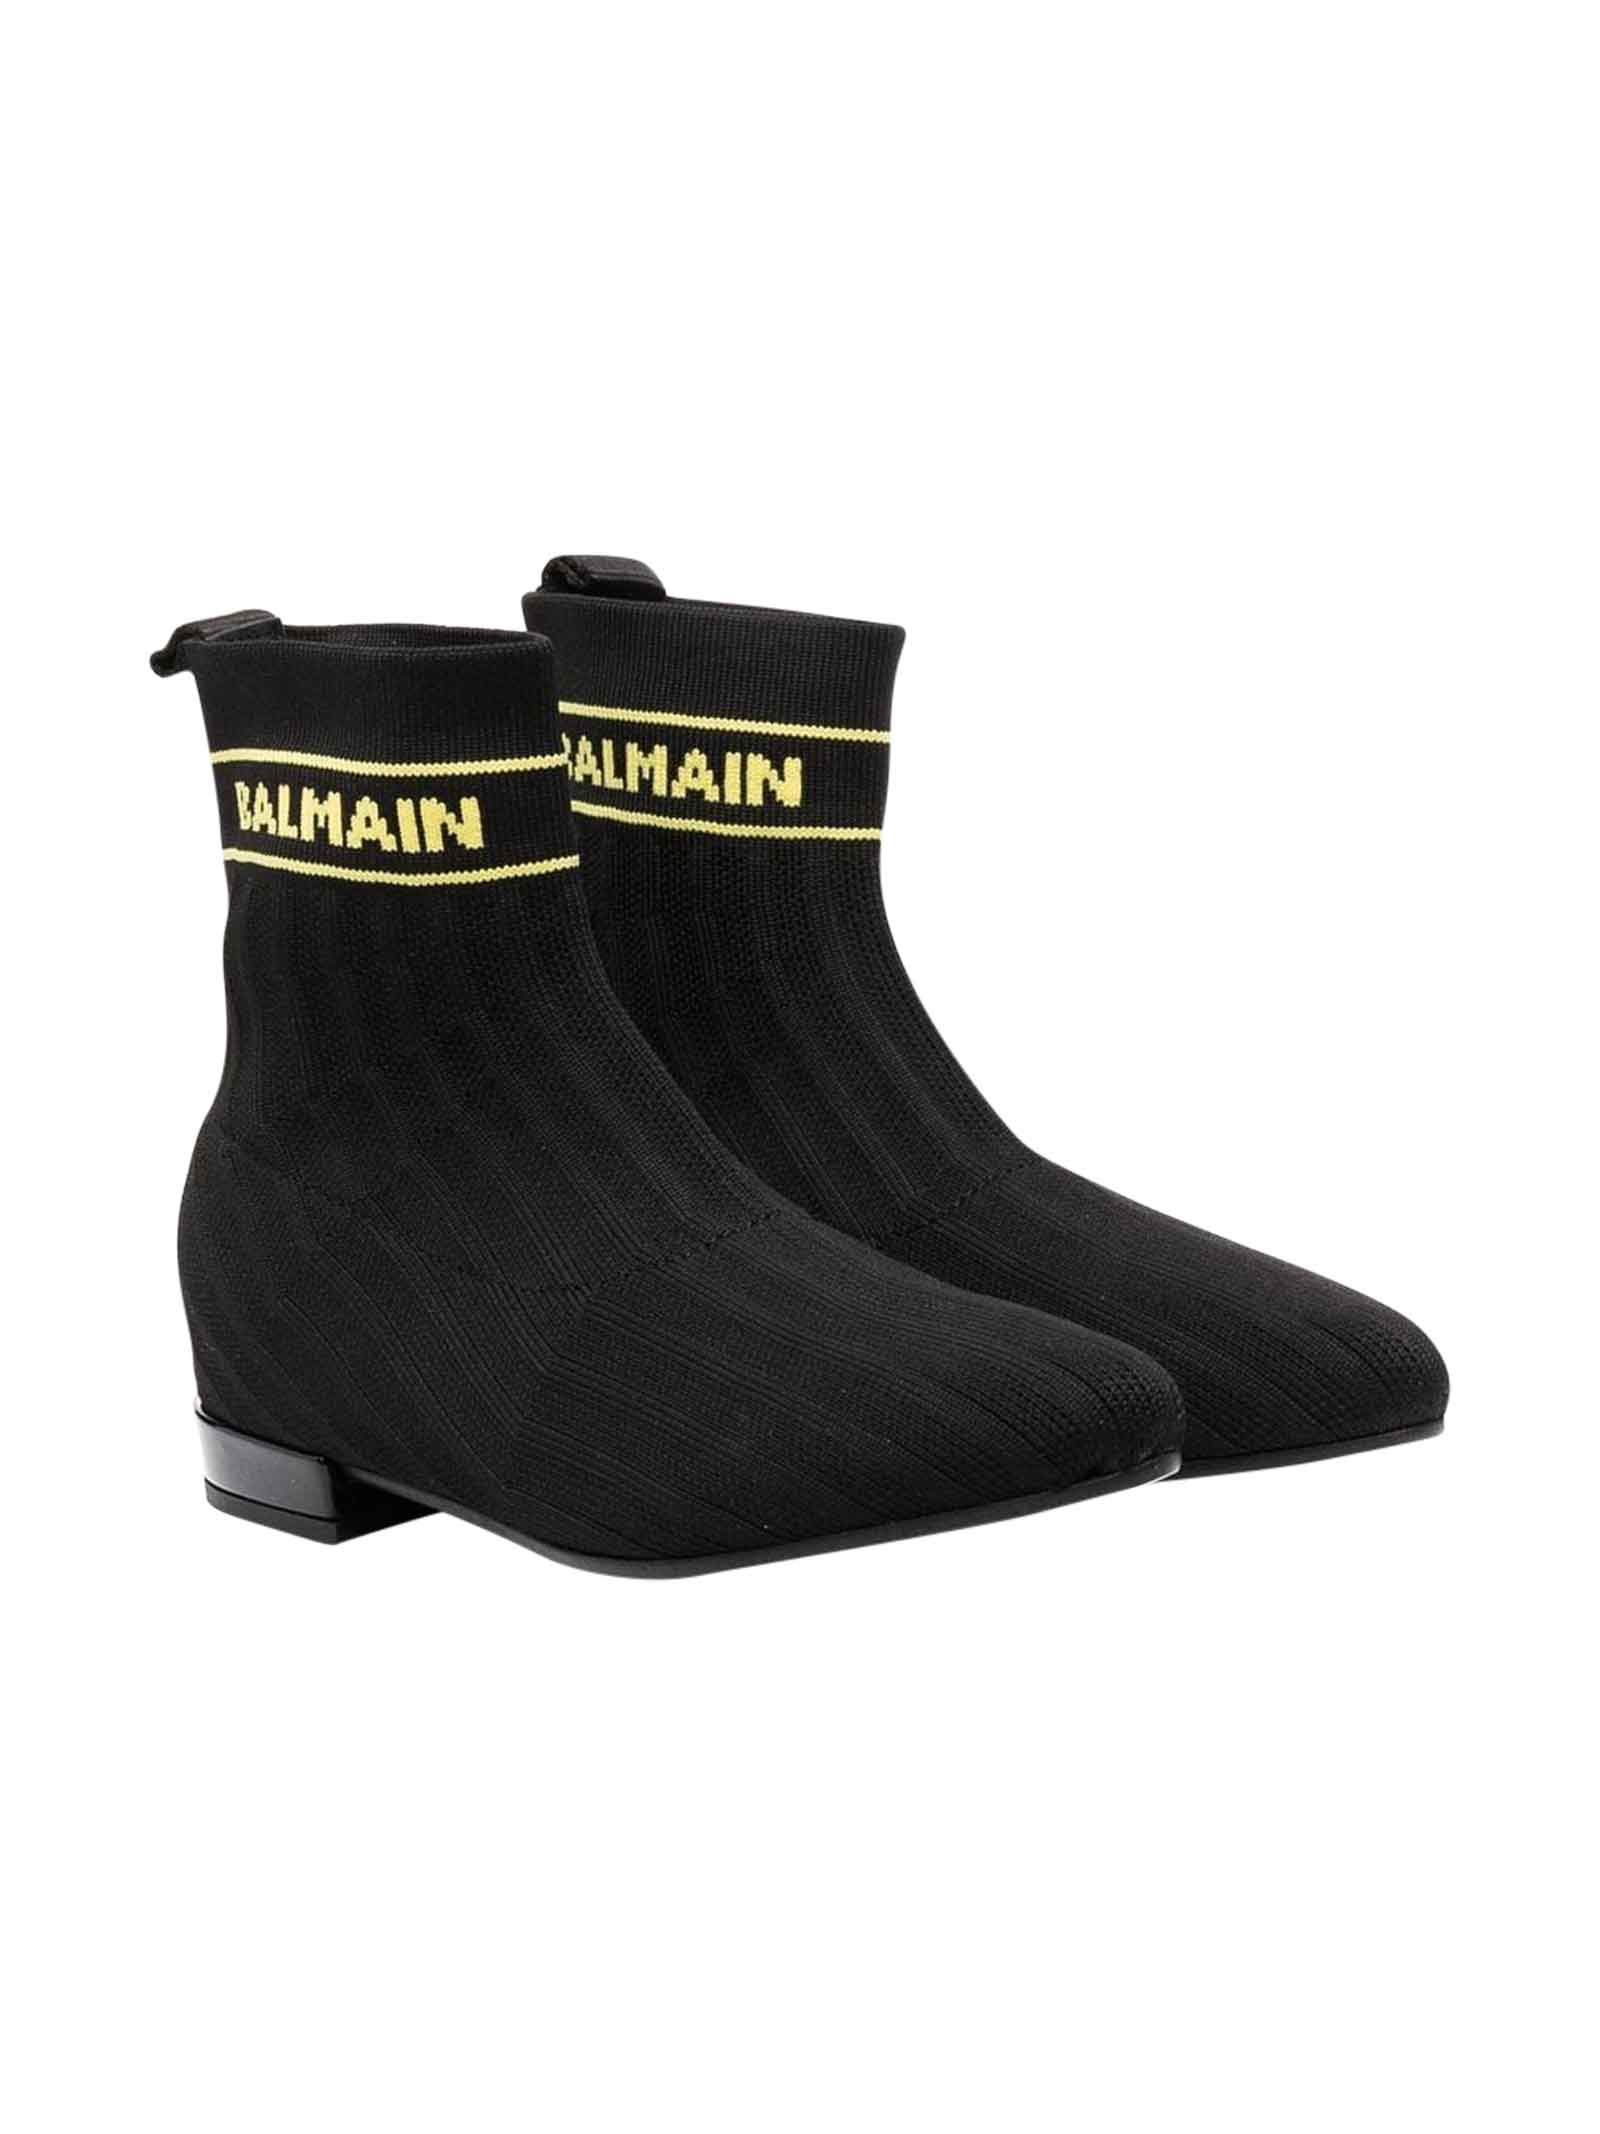 Balmain Black Ankle Boots